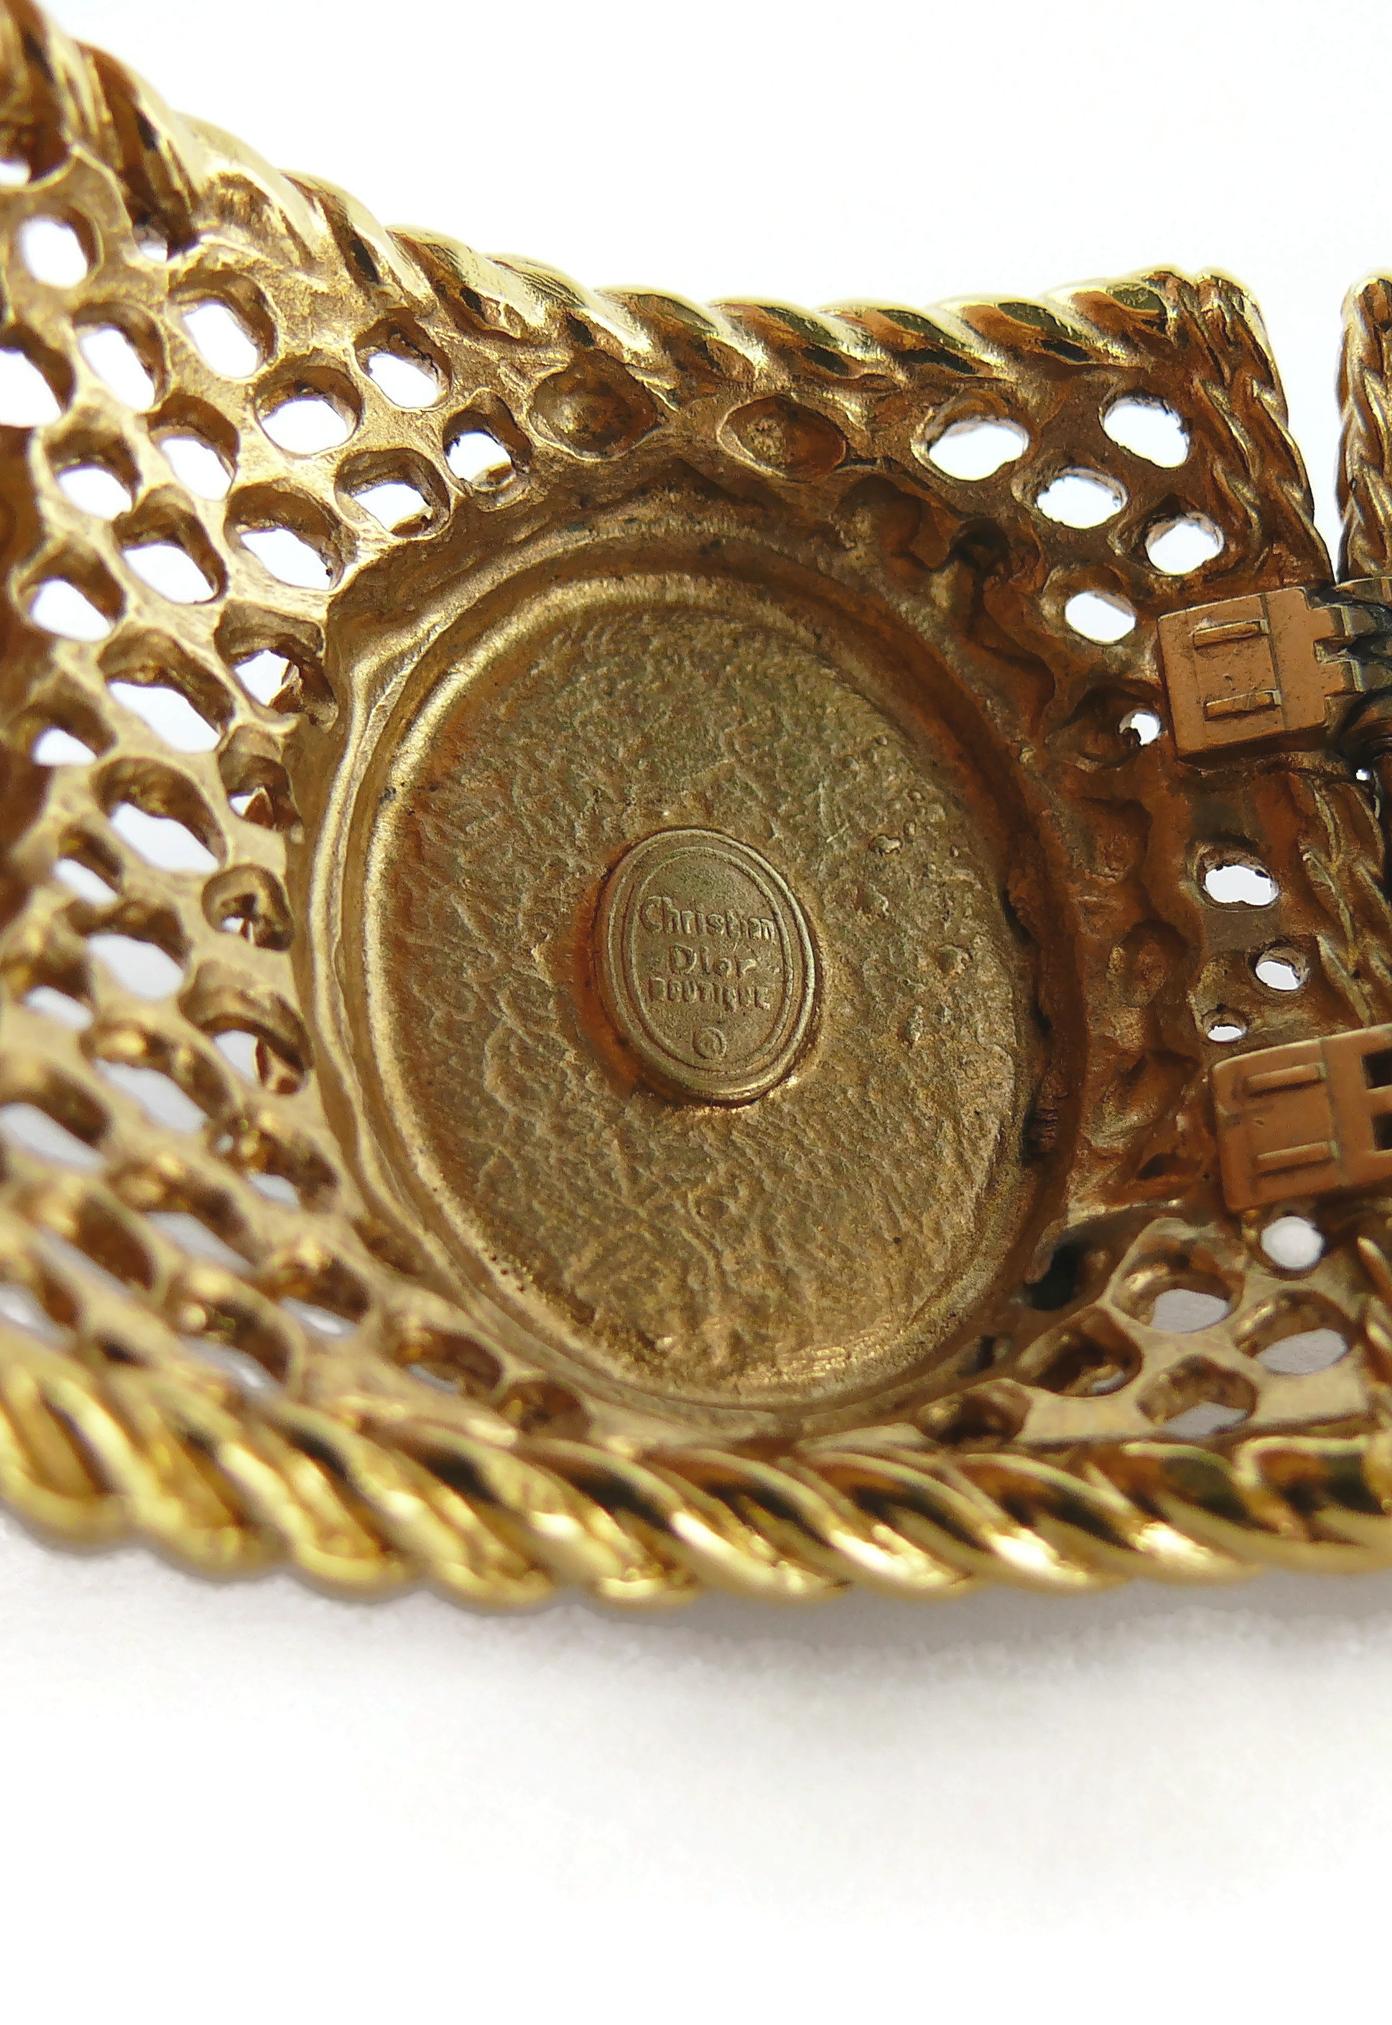 Christian Dior Boutique Massive Jewelled Gold Toned Latticework Cuff Bracelet For Sale 7